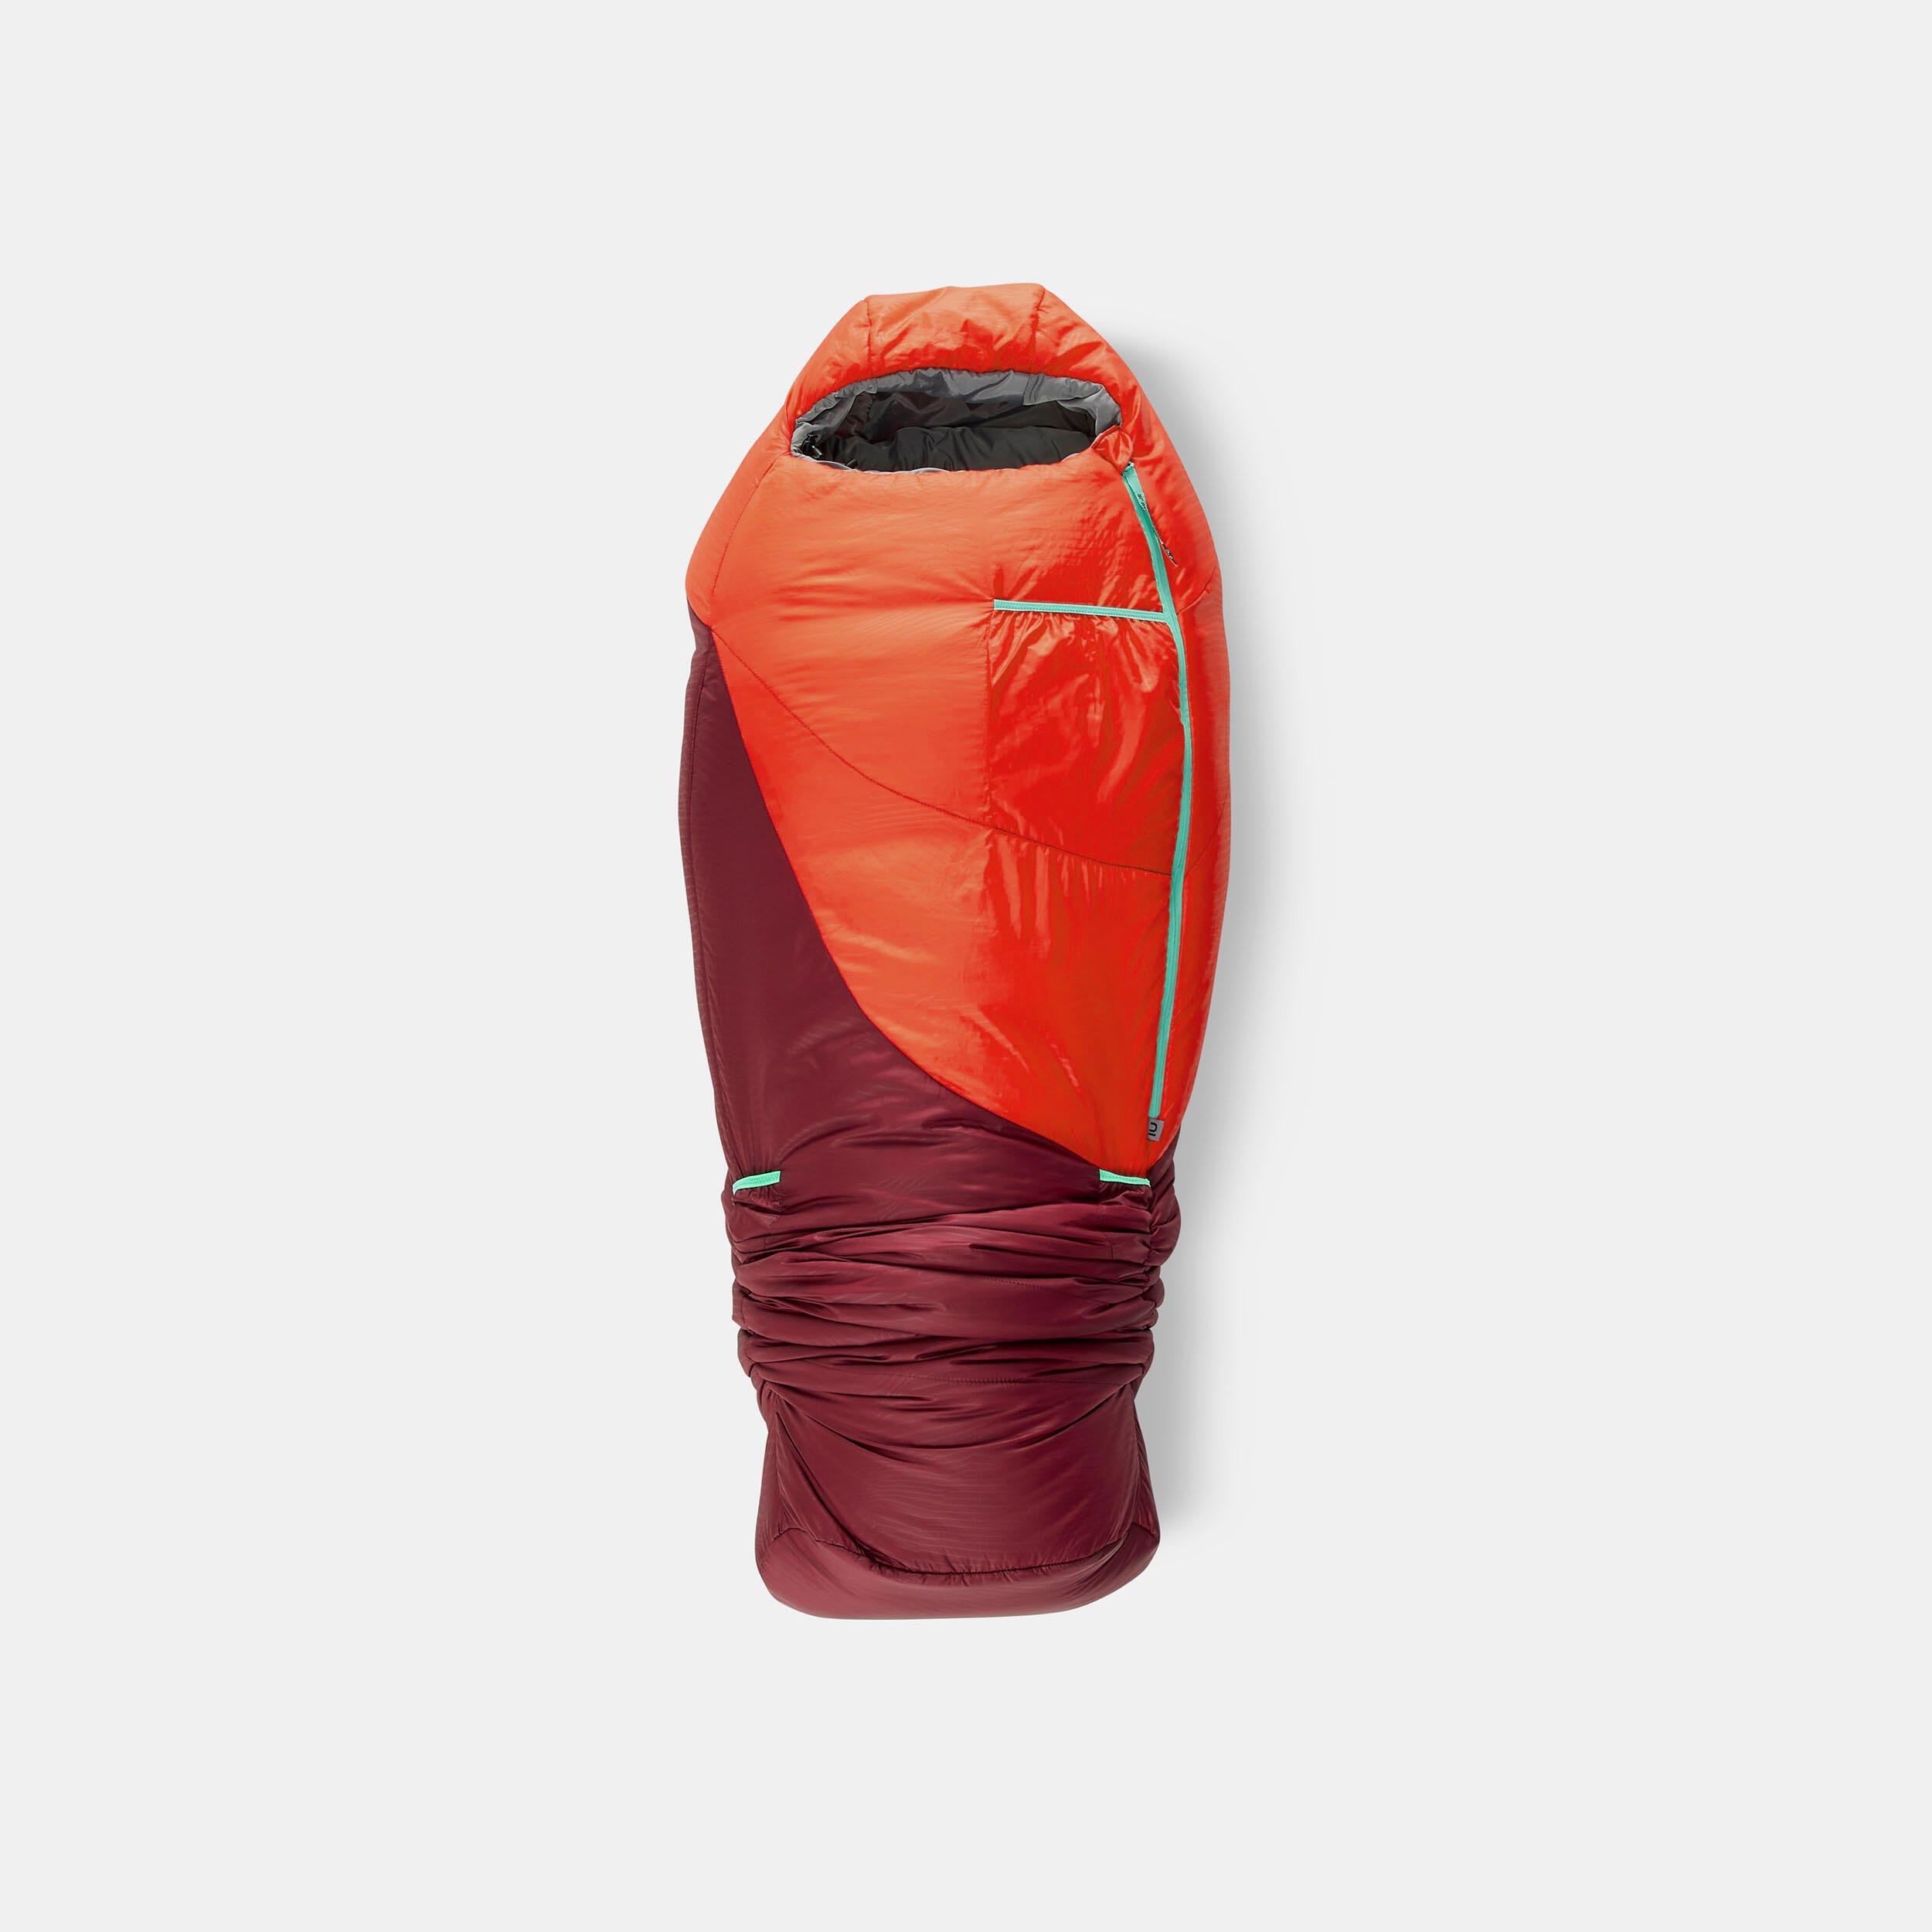 Children's Sleeping Bag MH500 0°C - red 4/12